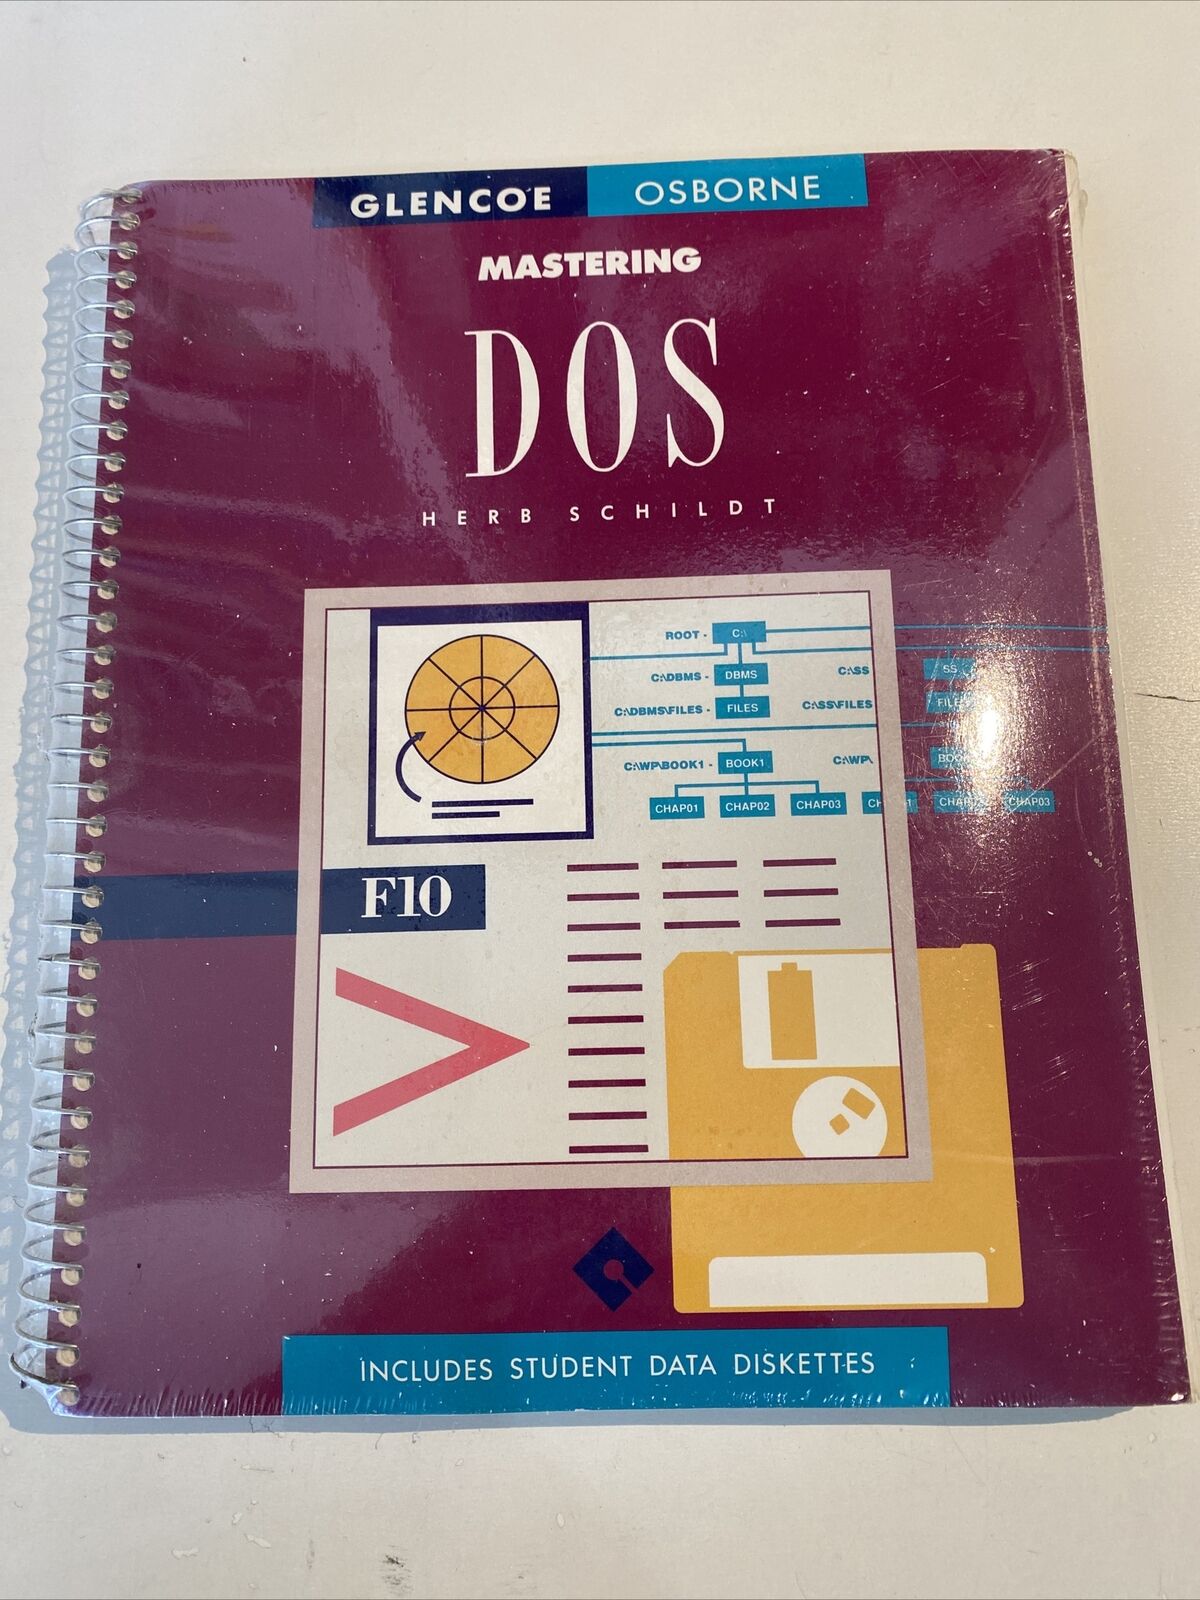 MASTERING DOS, Herb Schildt, Factory Sealed, Disks Included, Vintage Textbook